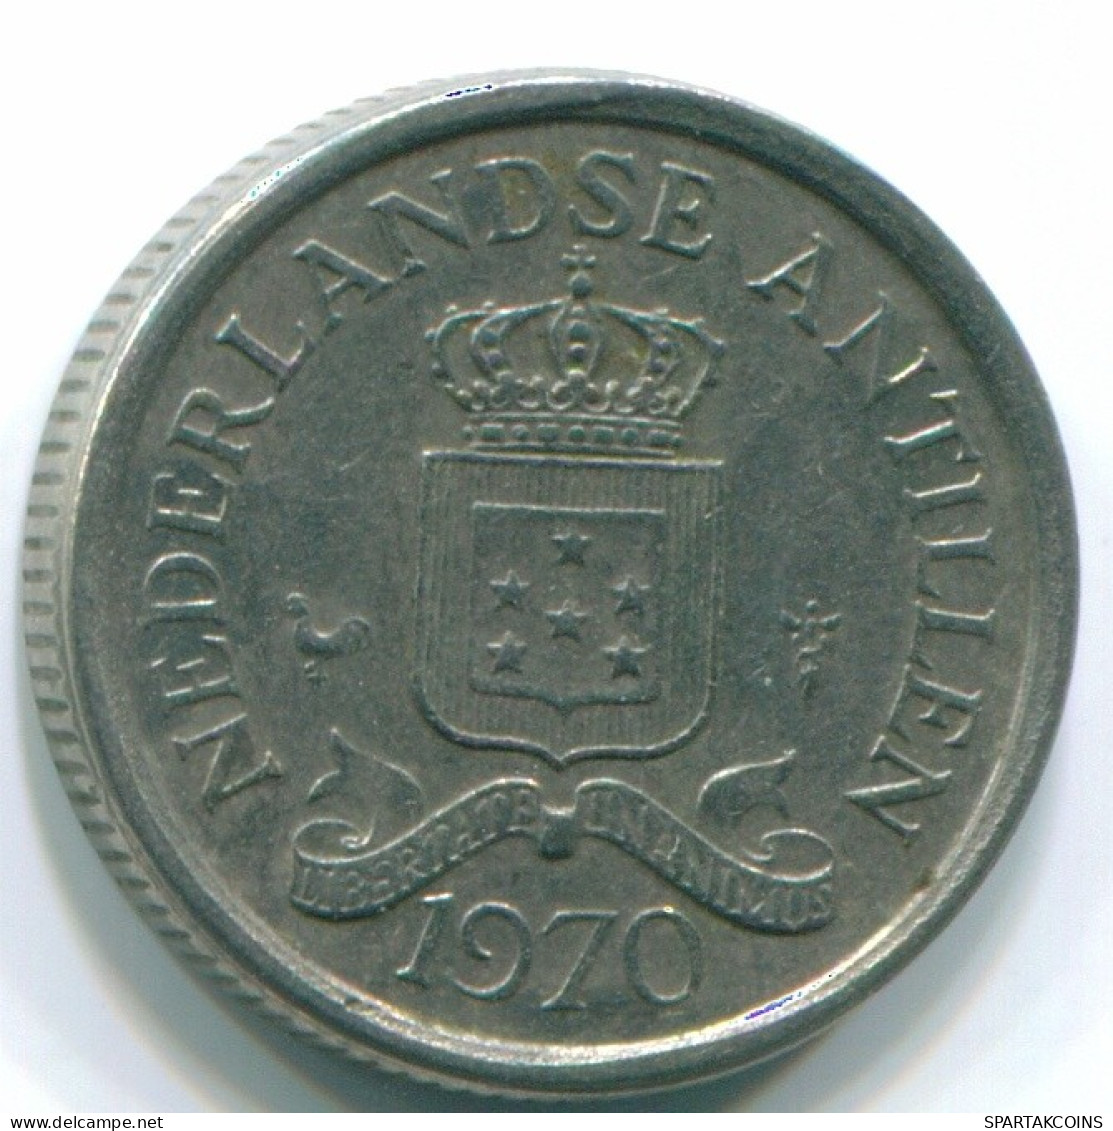 10 CENTS 1970 NIEDERLÄNDISCHE ANTILLEN Nickel Koloniale Münze #S13350.D.A - Nederlandse Antillen